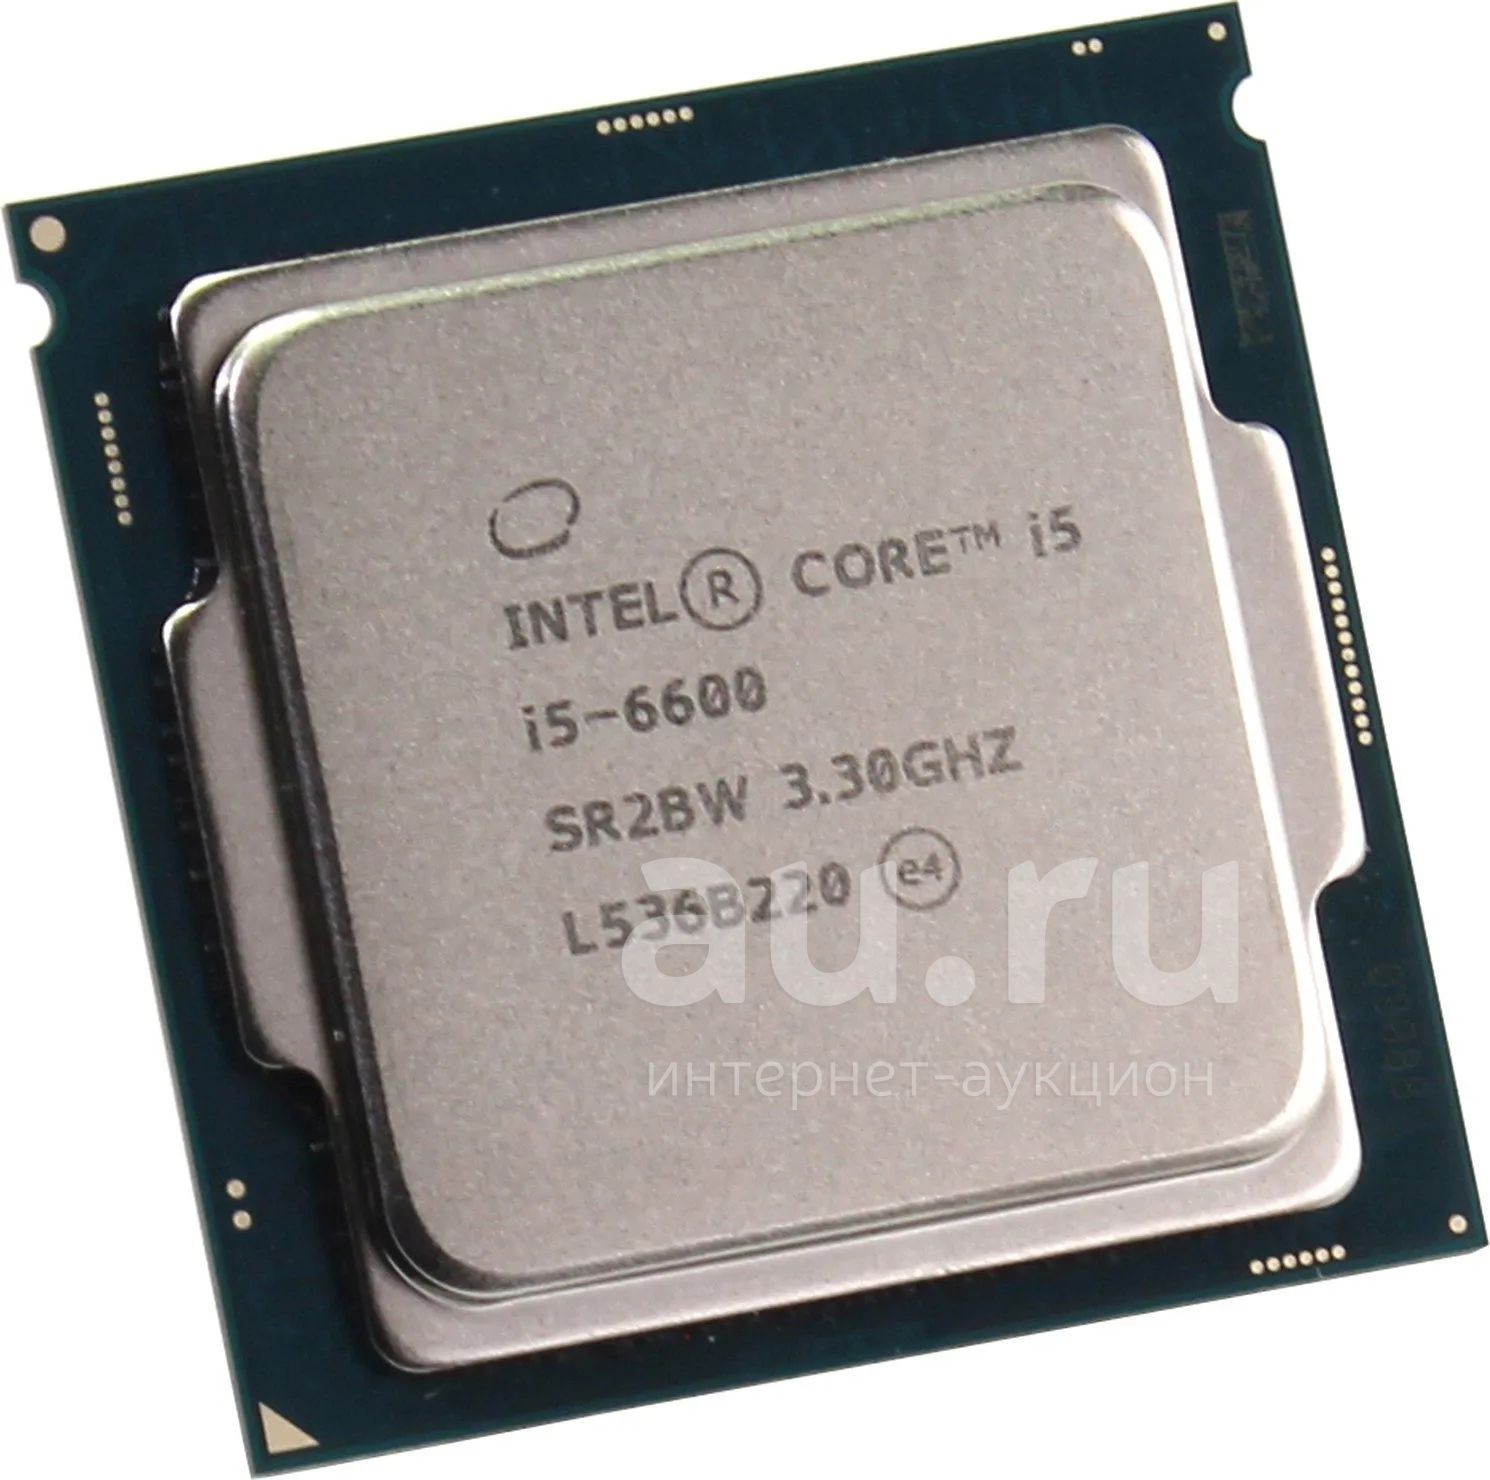 I3 3.3 ghz. Intel Core i5 6600. Intel Core i5-6600 3.3GHZ. Intel Core i5-6600 Skylake. Процессор CPU Intel Core i5.